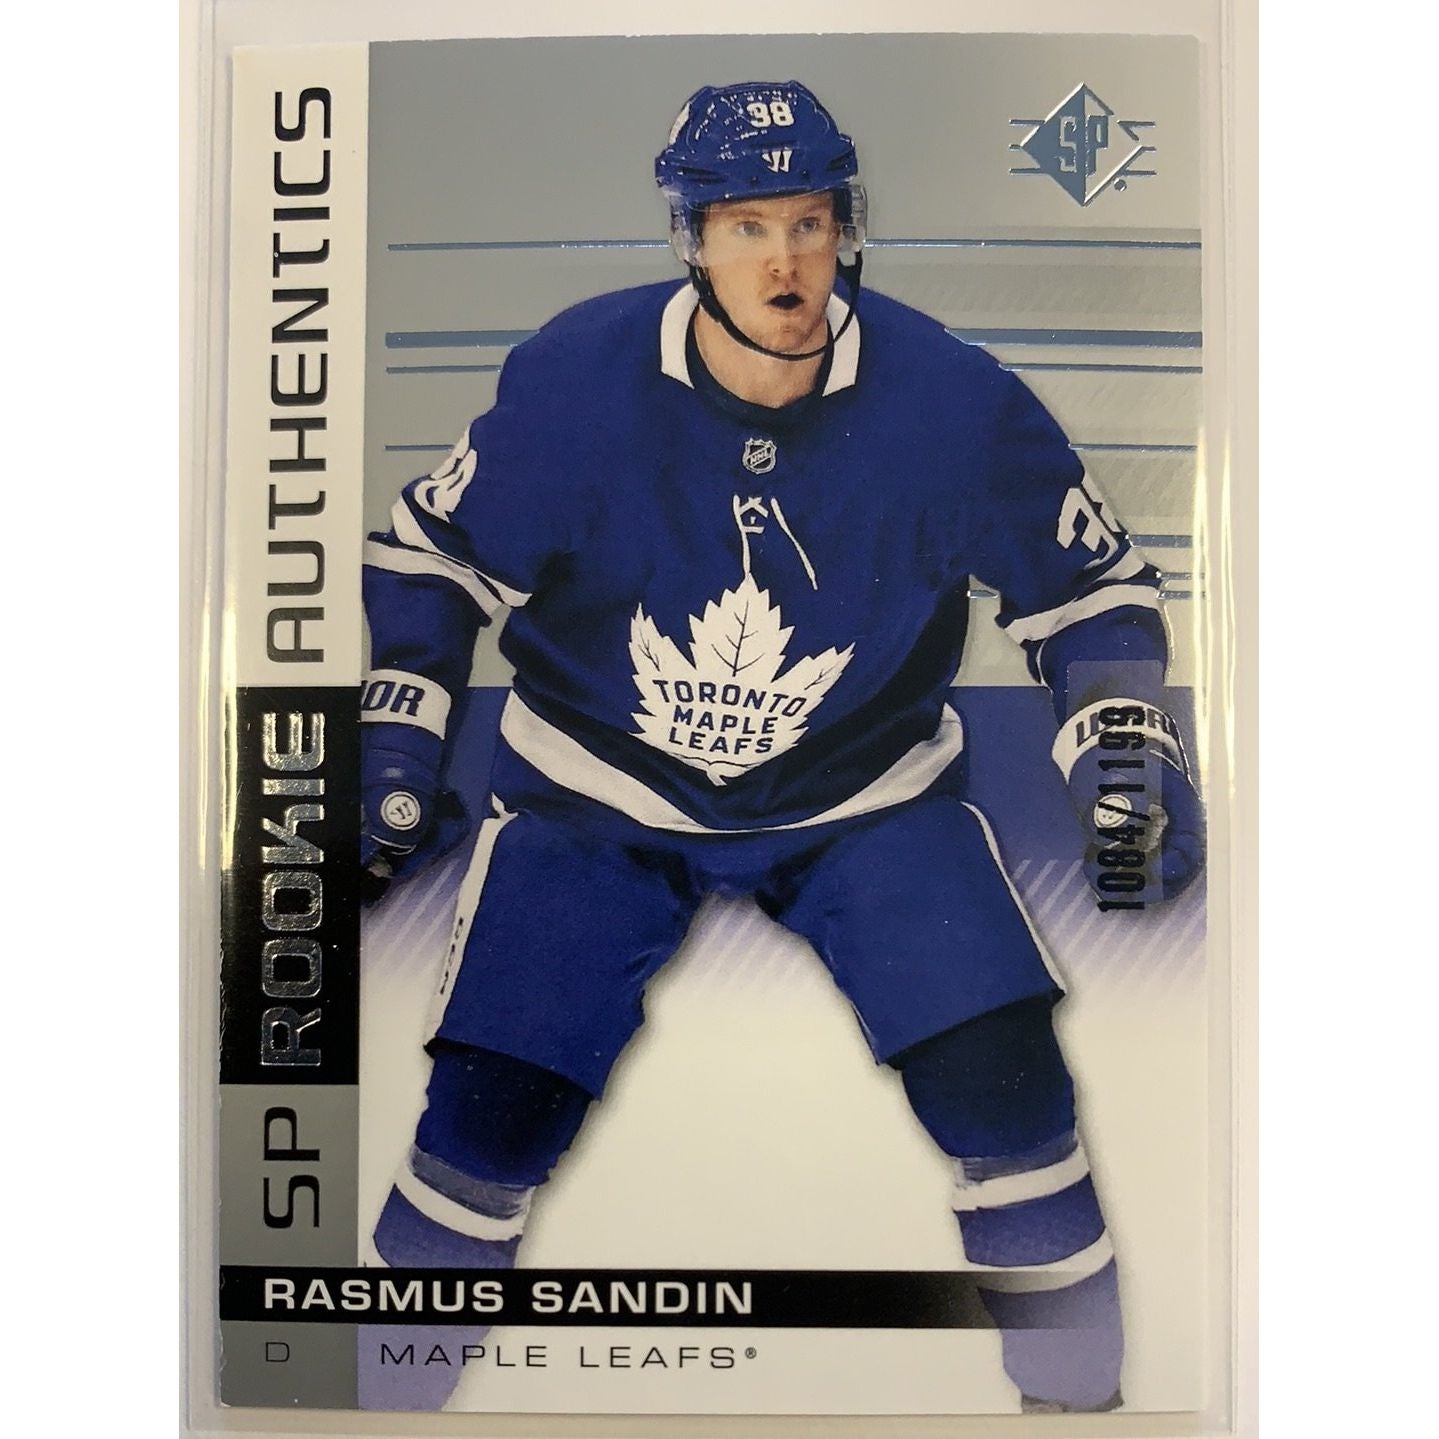  2019-20 SP Rasmus Sandin Rookie Authentics /1199  Local Legends Cards & Collectibles